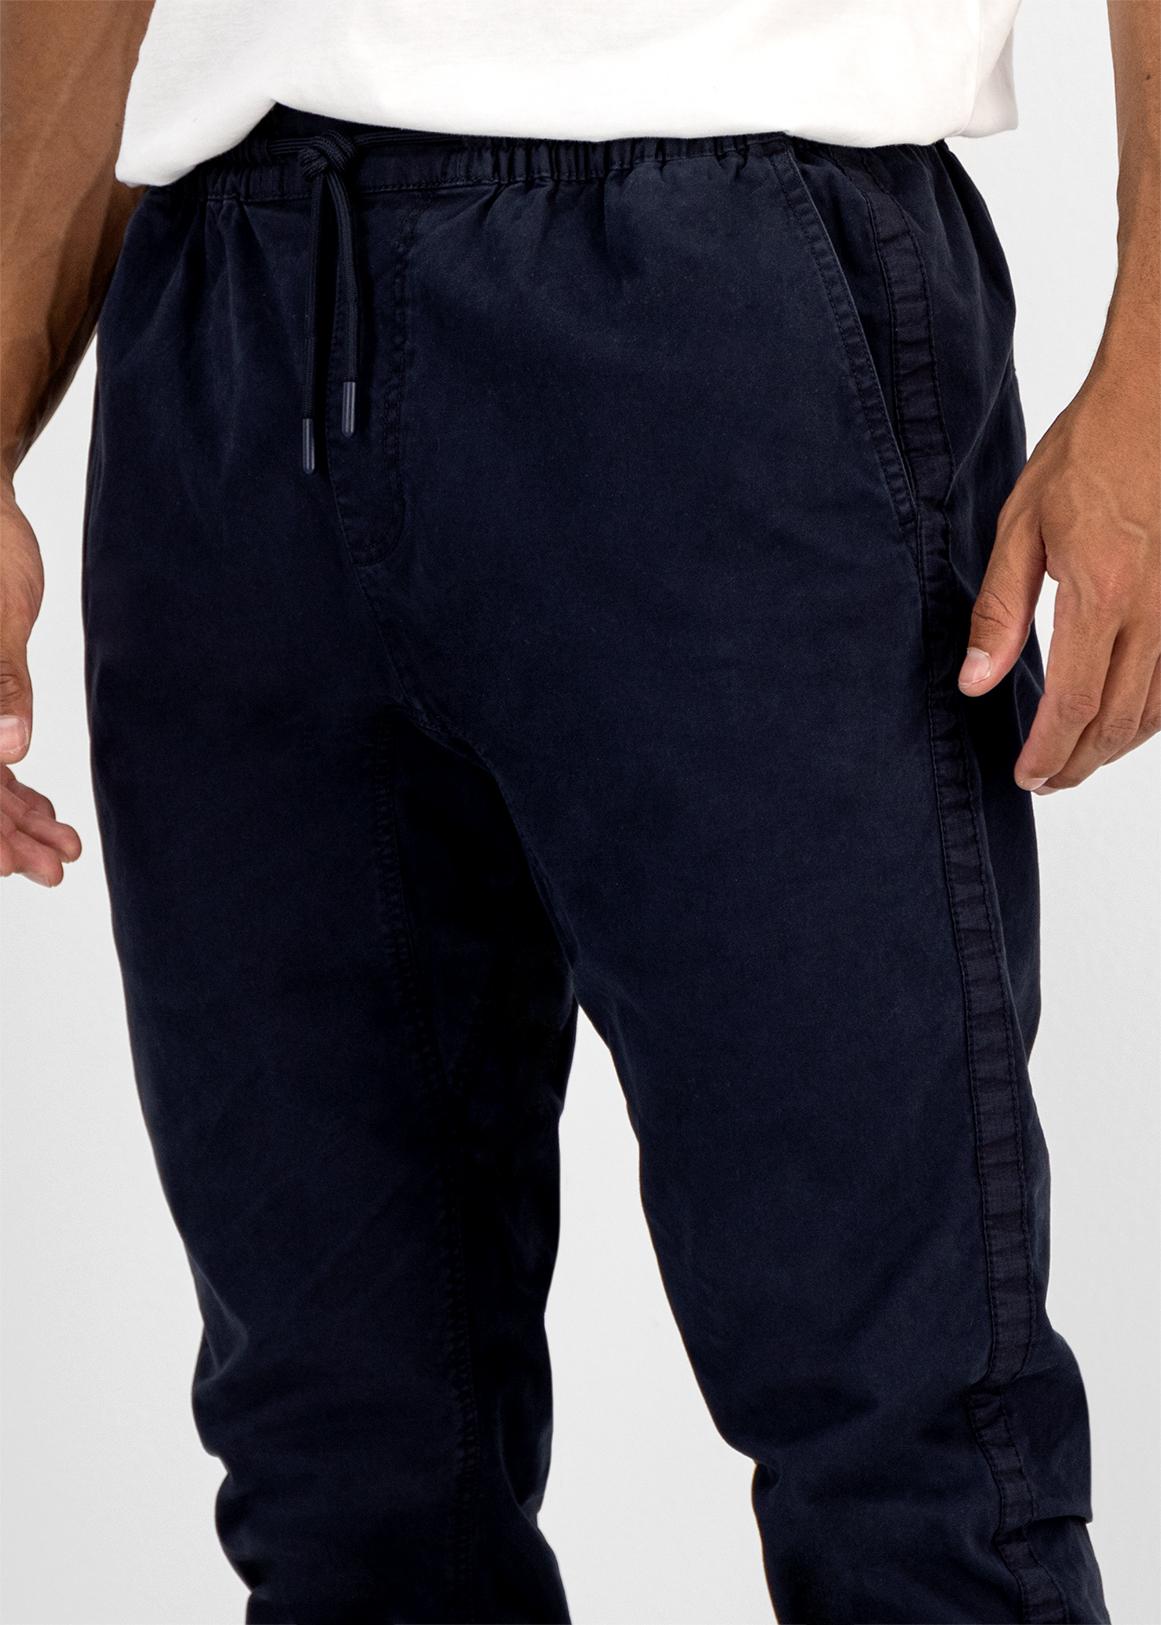 INSPI Jogger Sweatpants for Men with Pockets and Drawstring Stretchabl